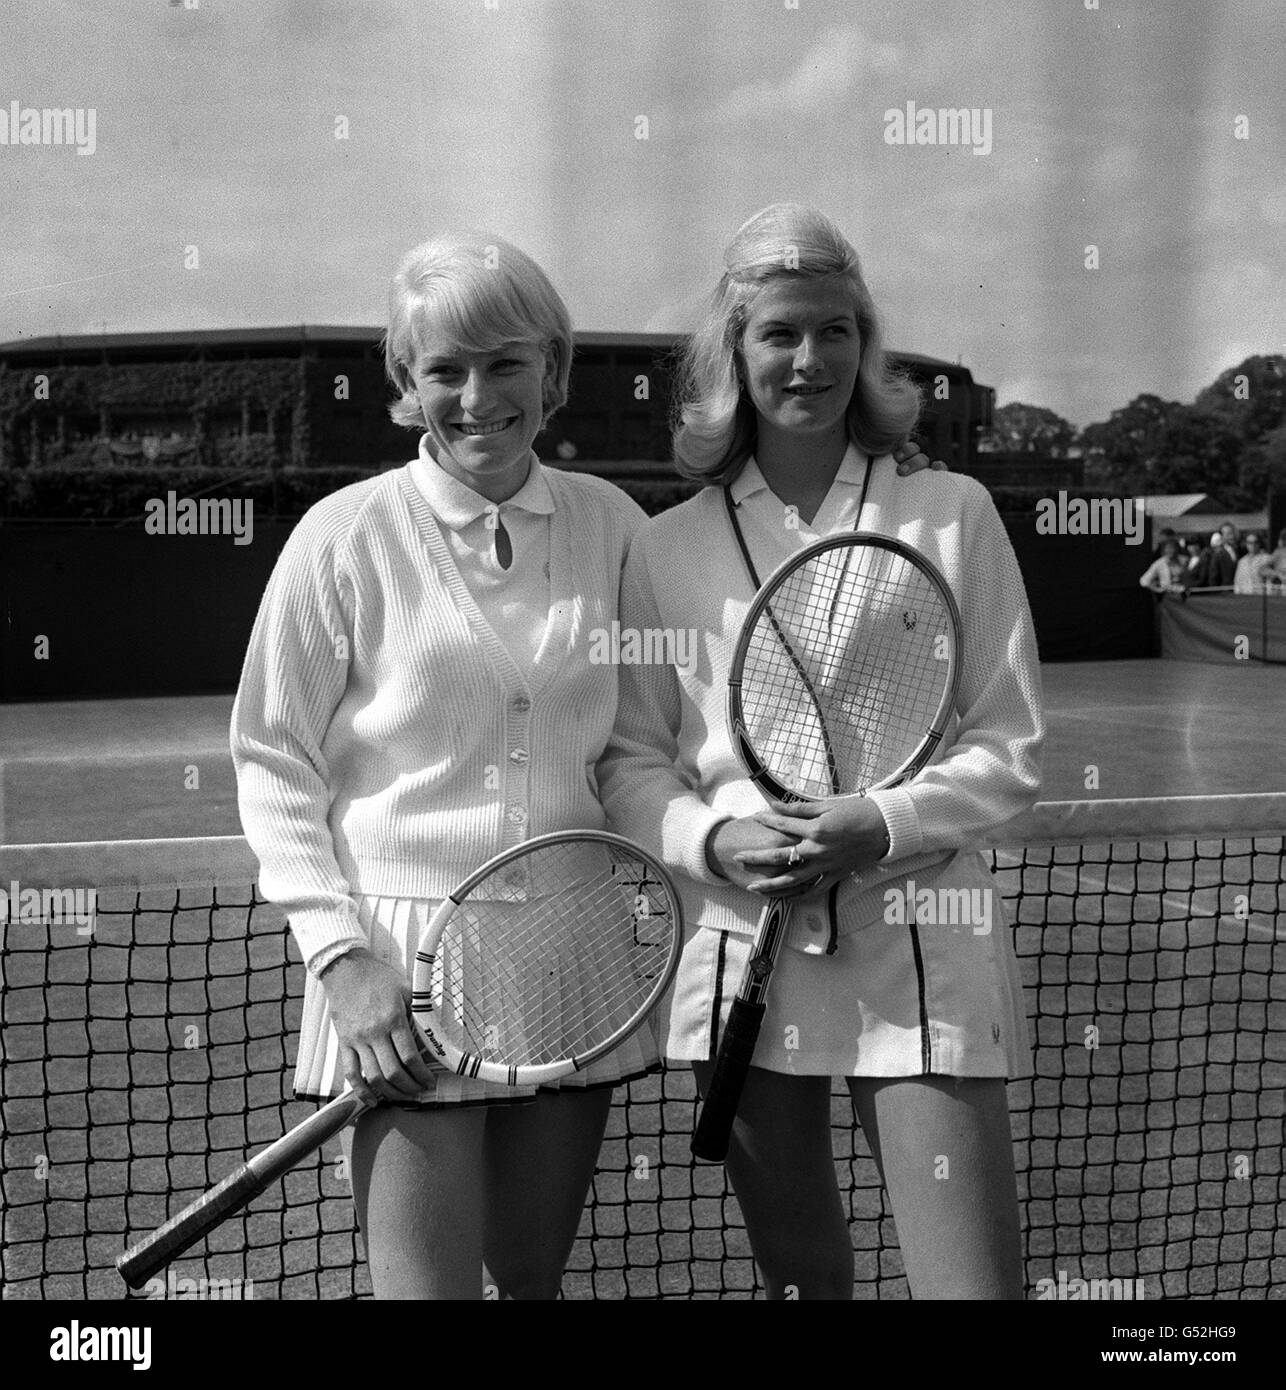 Wimbledon sisters Stock Photo